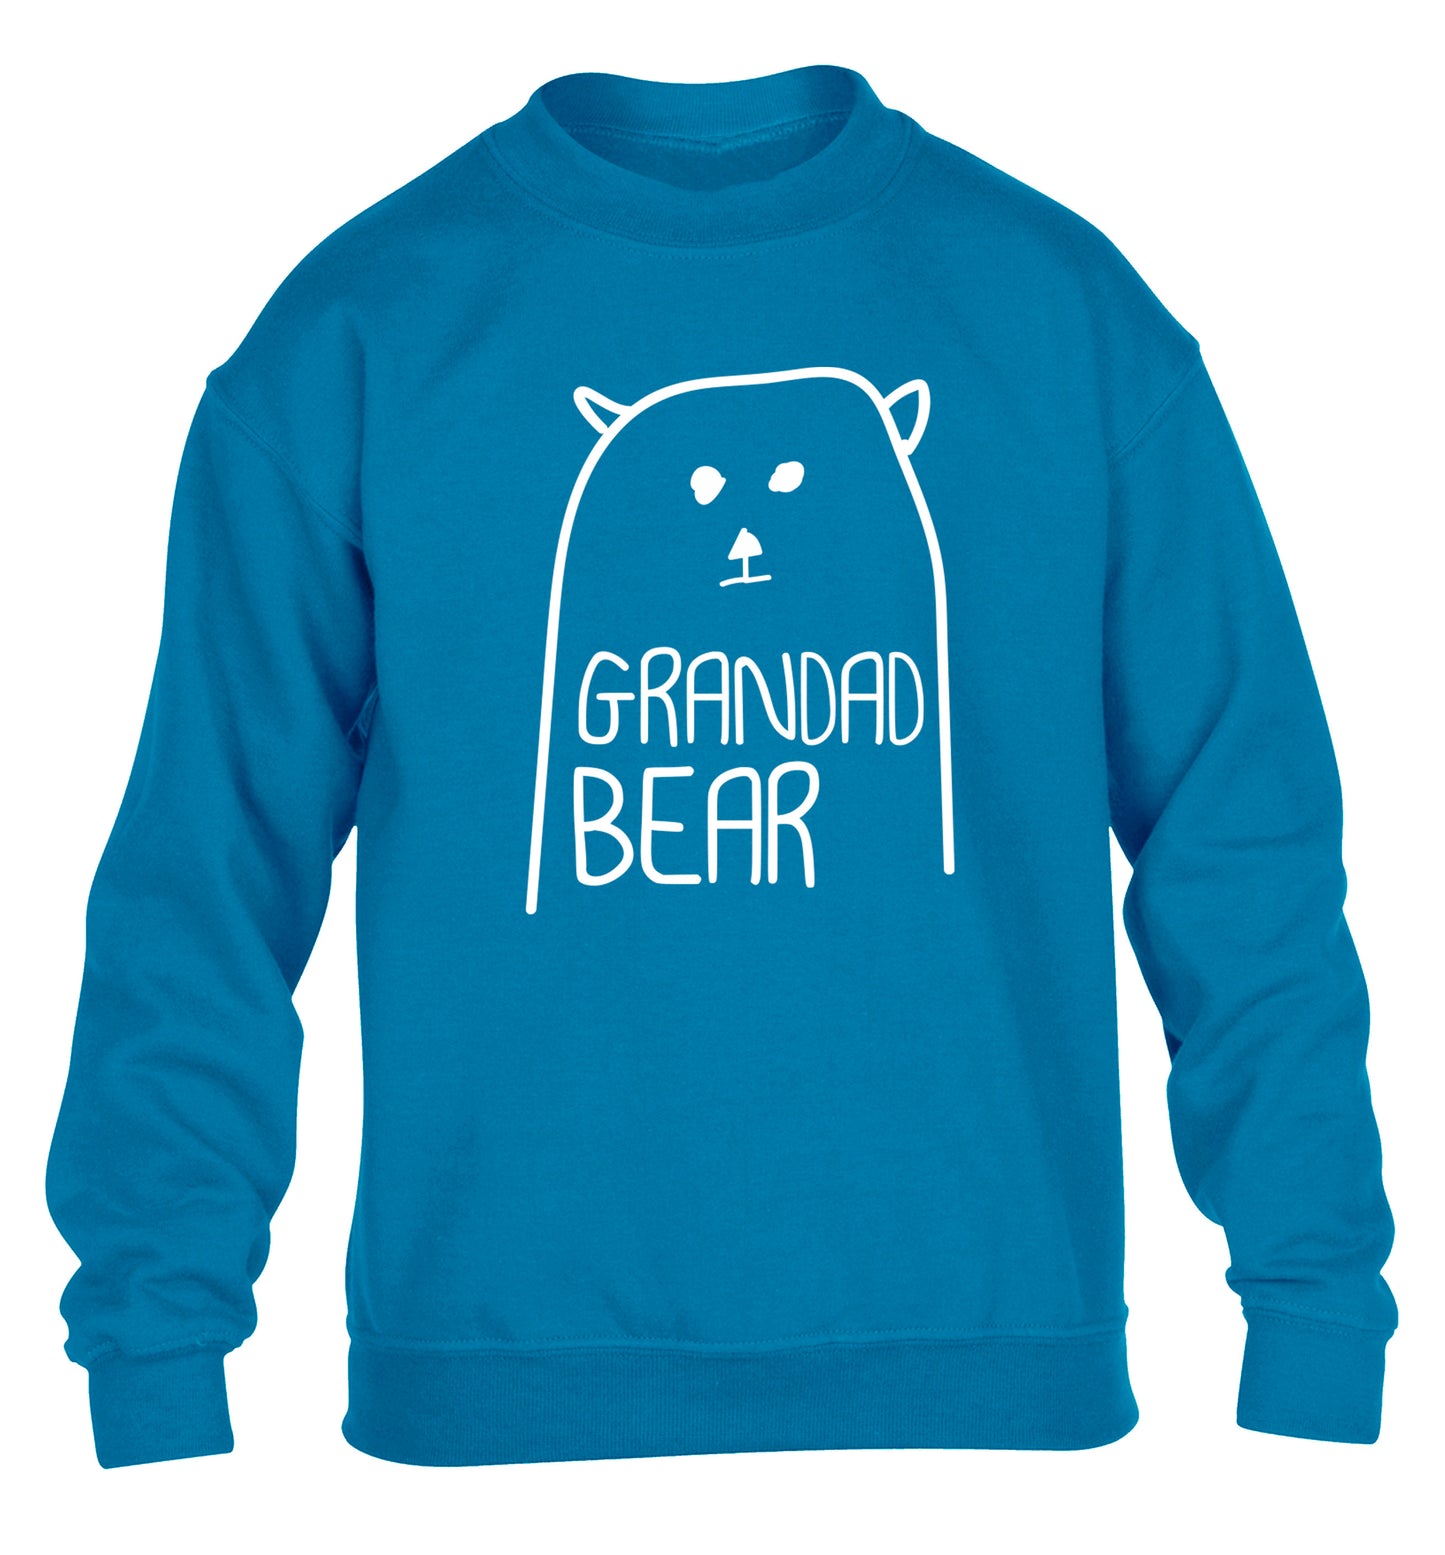 Grandad bear children's blue sweater 12-13 Years